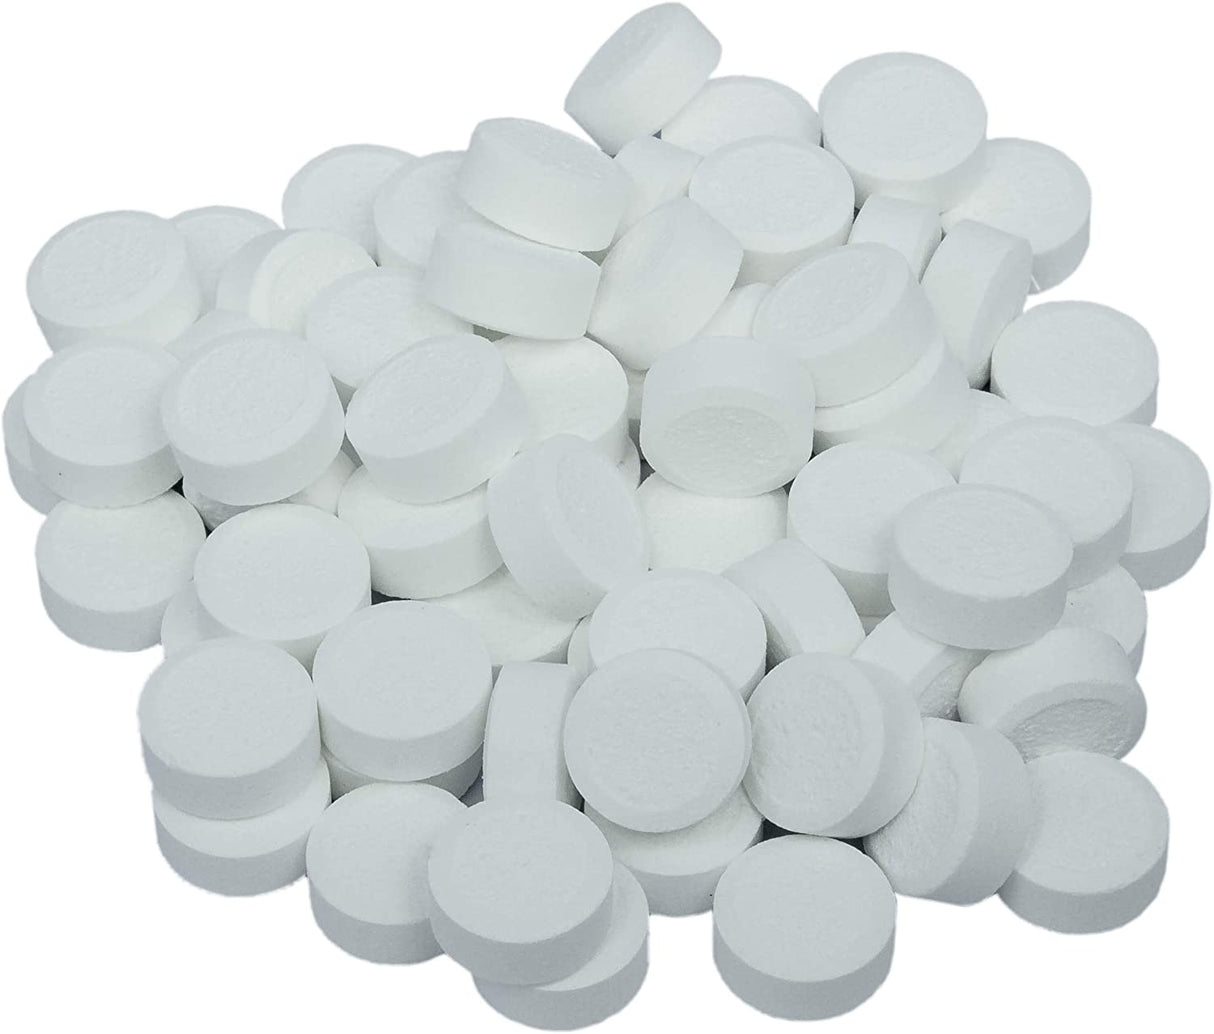 La Radiosa Milk Cleaning Tablets (100 tablets)